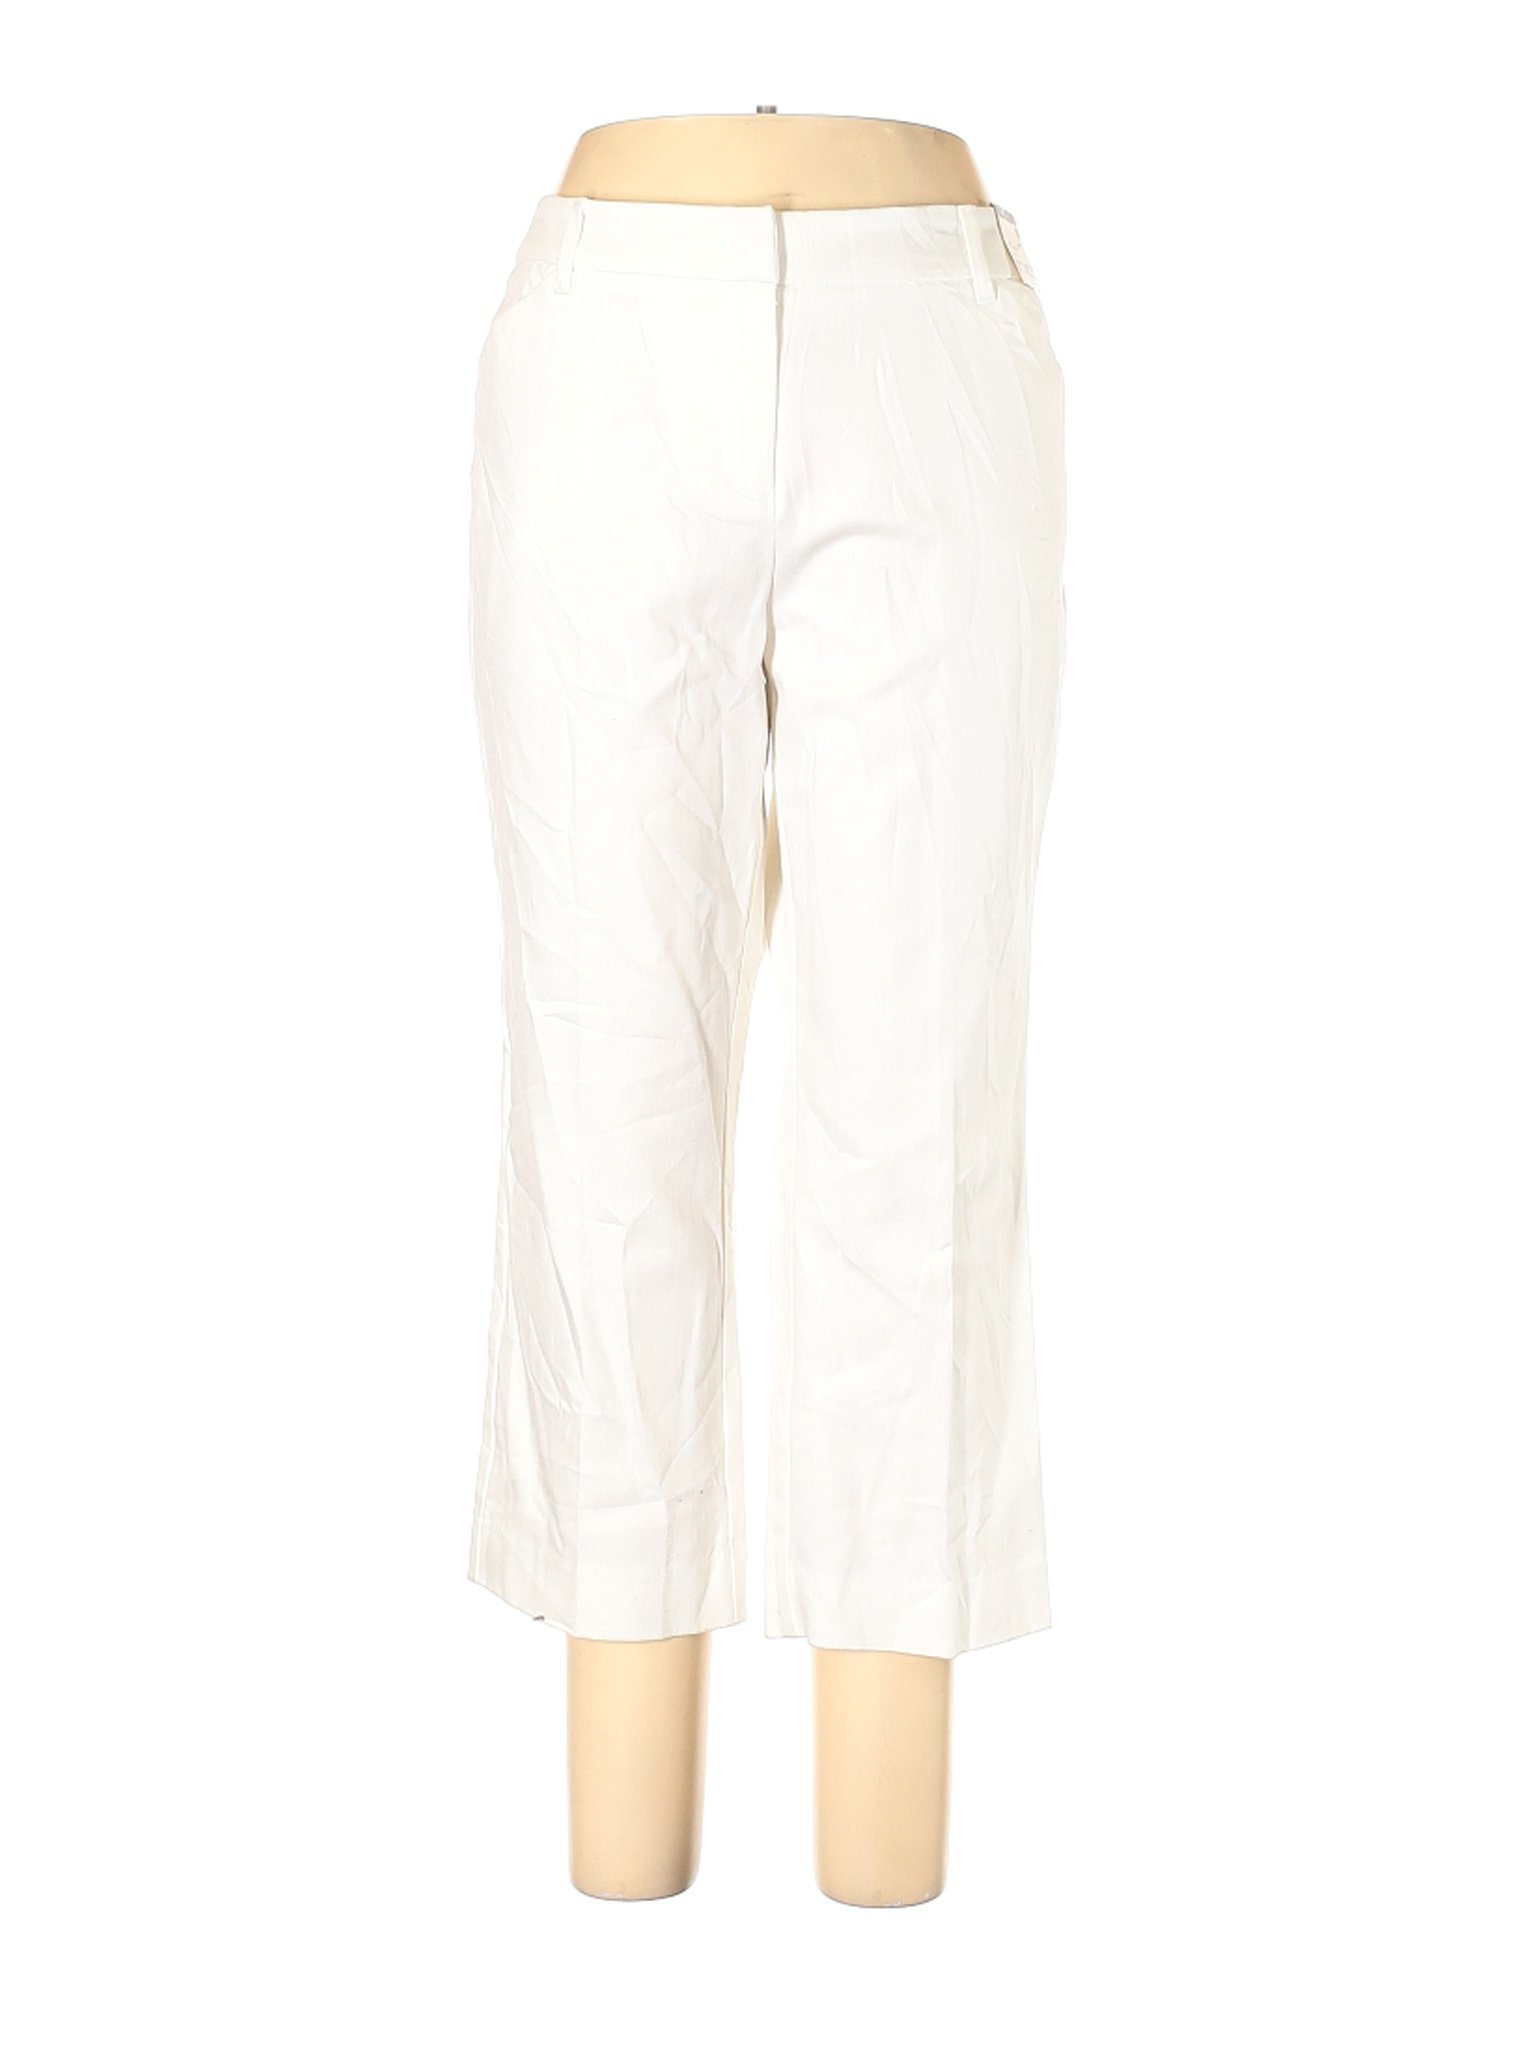 NWT New York & Company Women White Khakis 14 | eBay